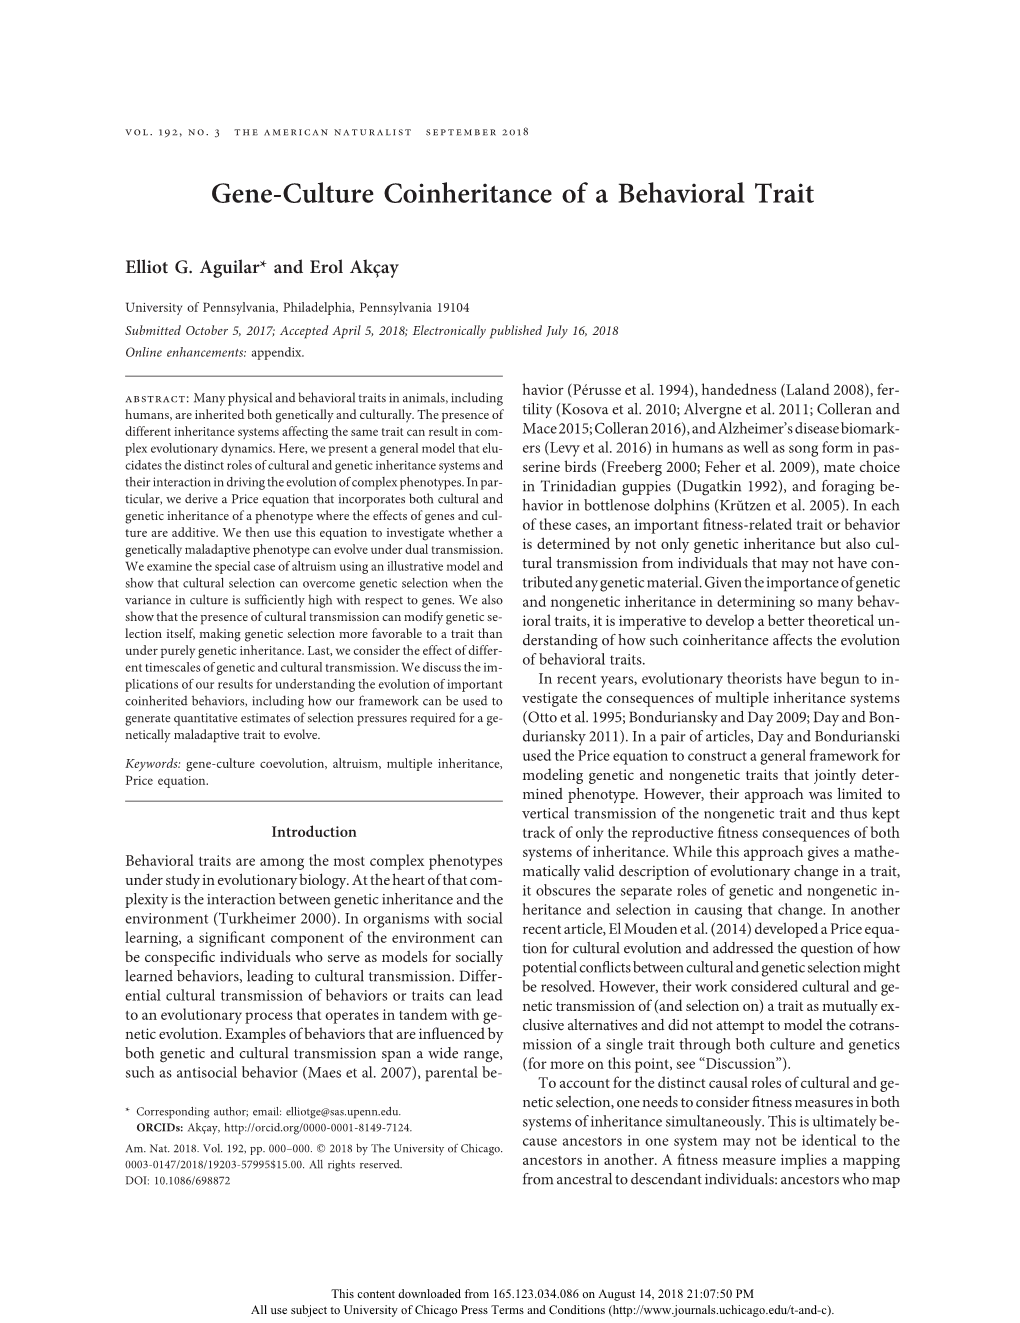 Gene-Culture Coinheritance of a Behavioral Trait